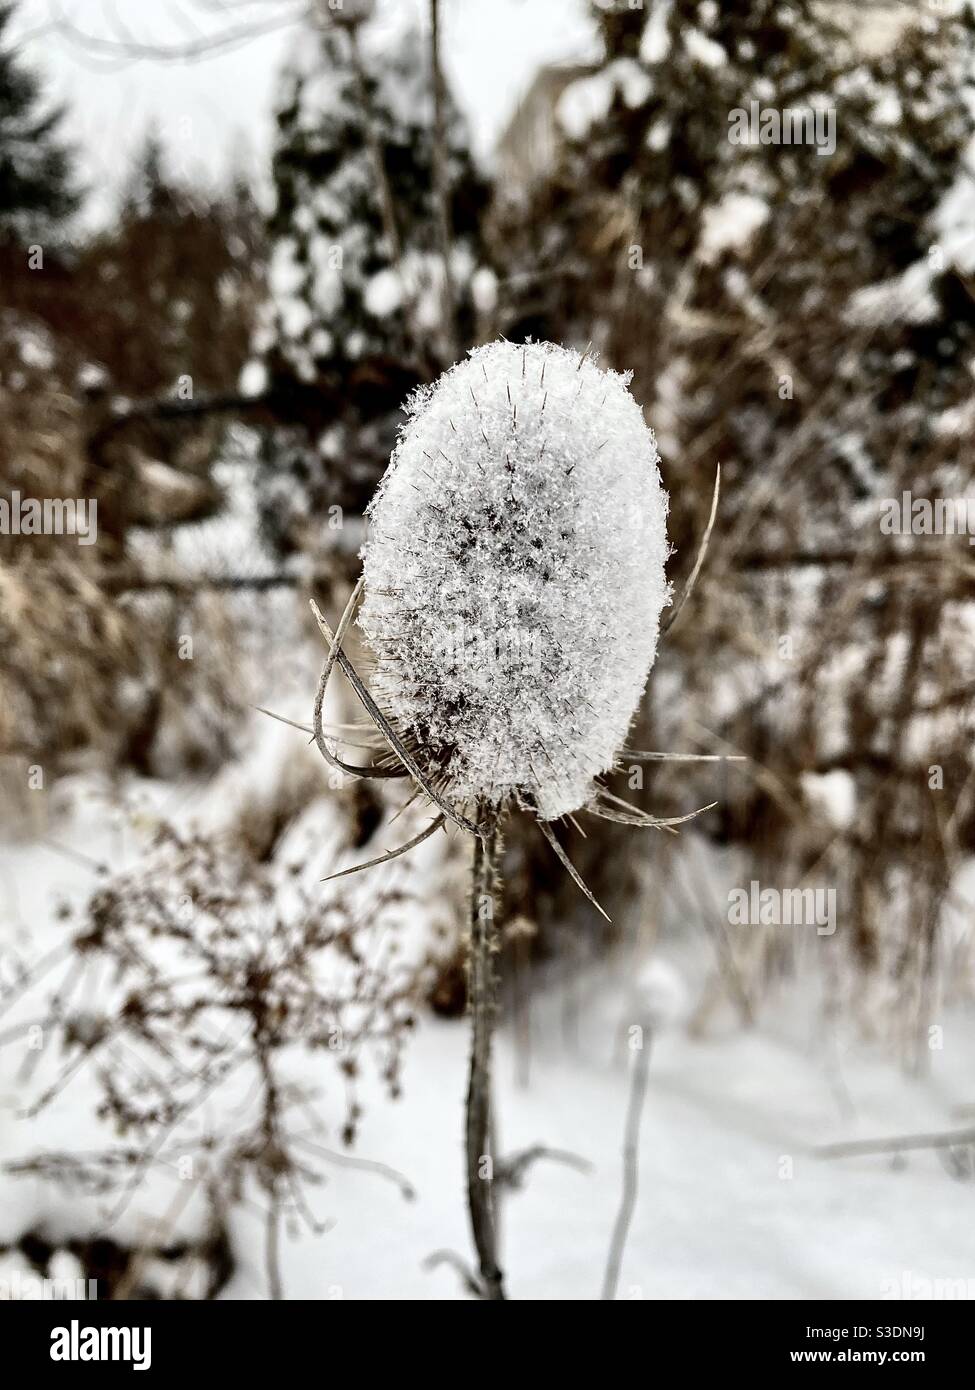 Ice, winter, nature’s beauty Stock Photo